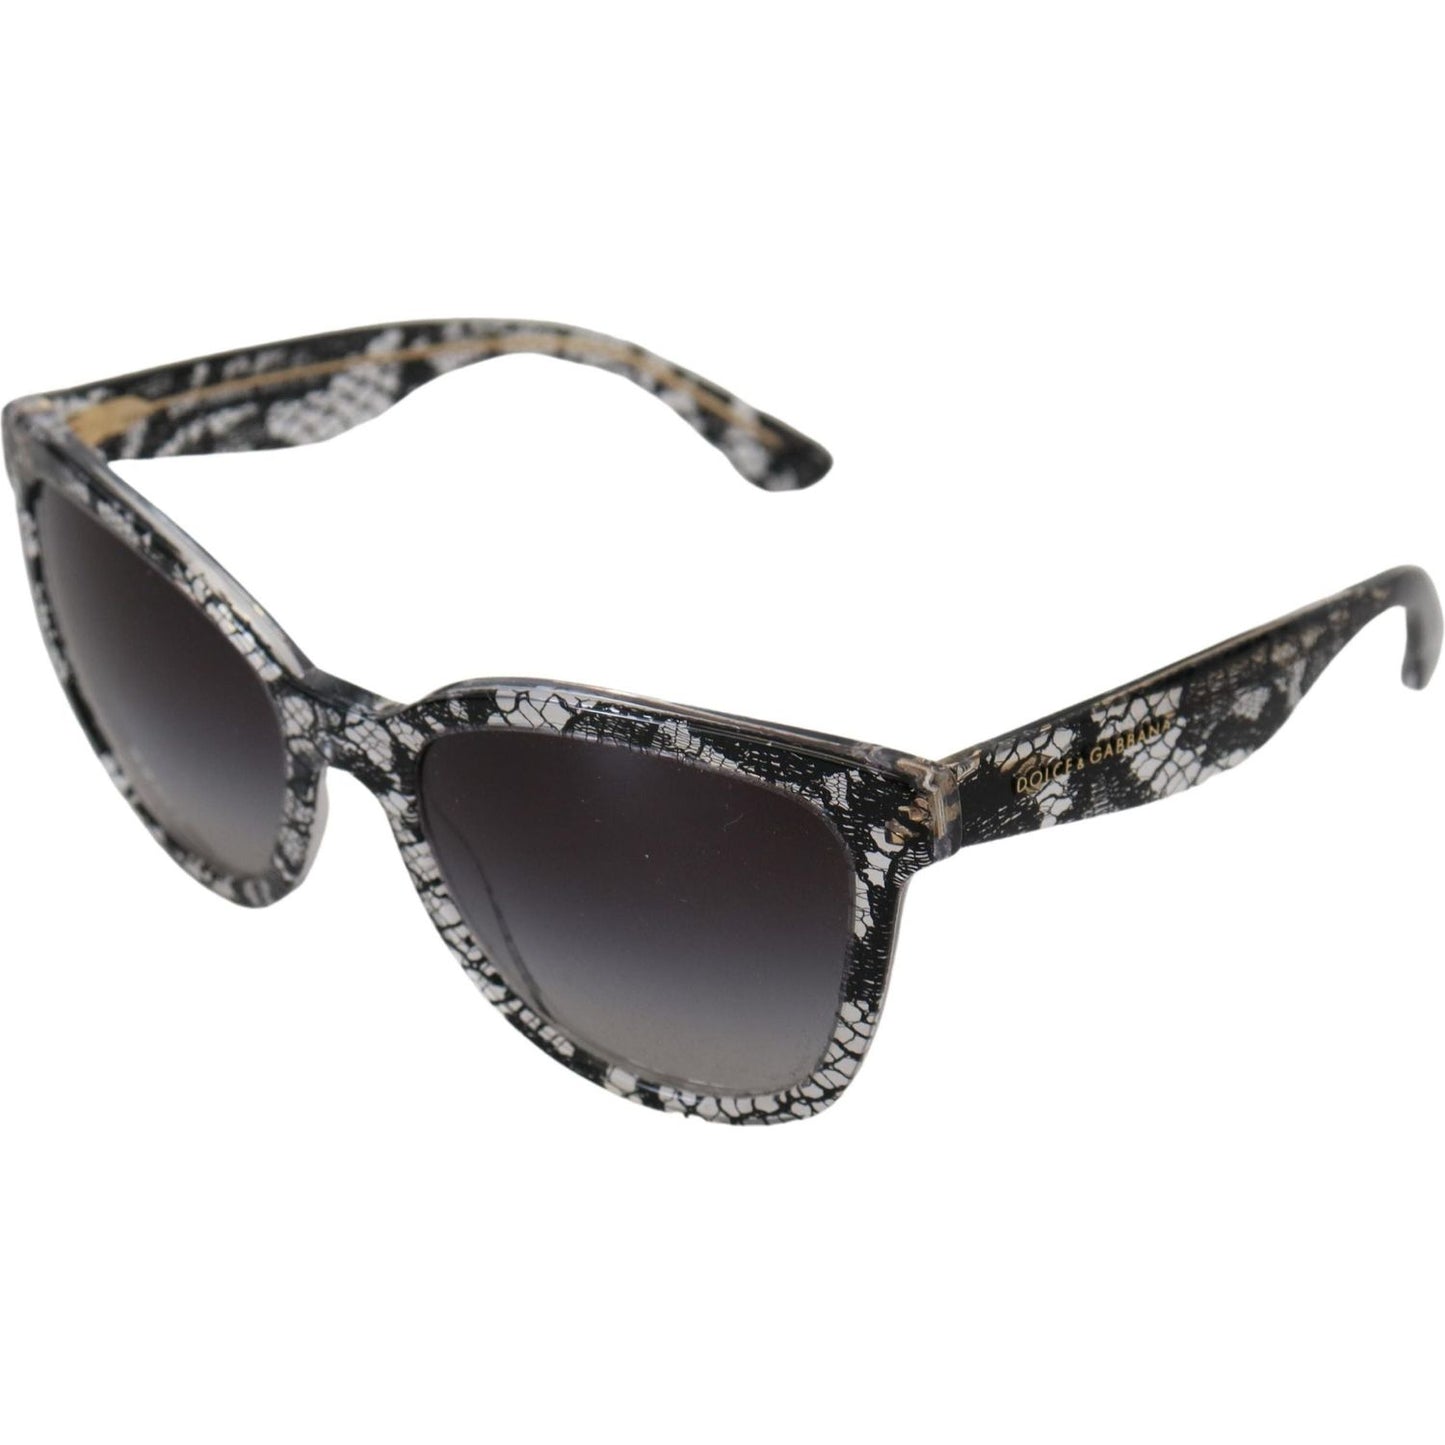 Dolce & Gabbana Elegant White Lace Applique Sunglasses black-lace-white-acetate-frame-shades-dg4190-sunglasses